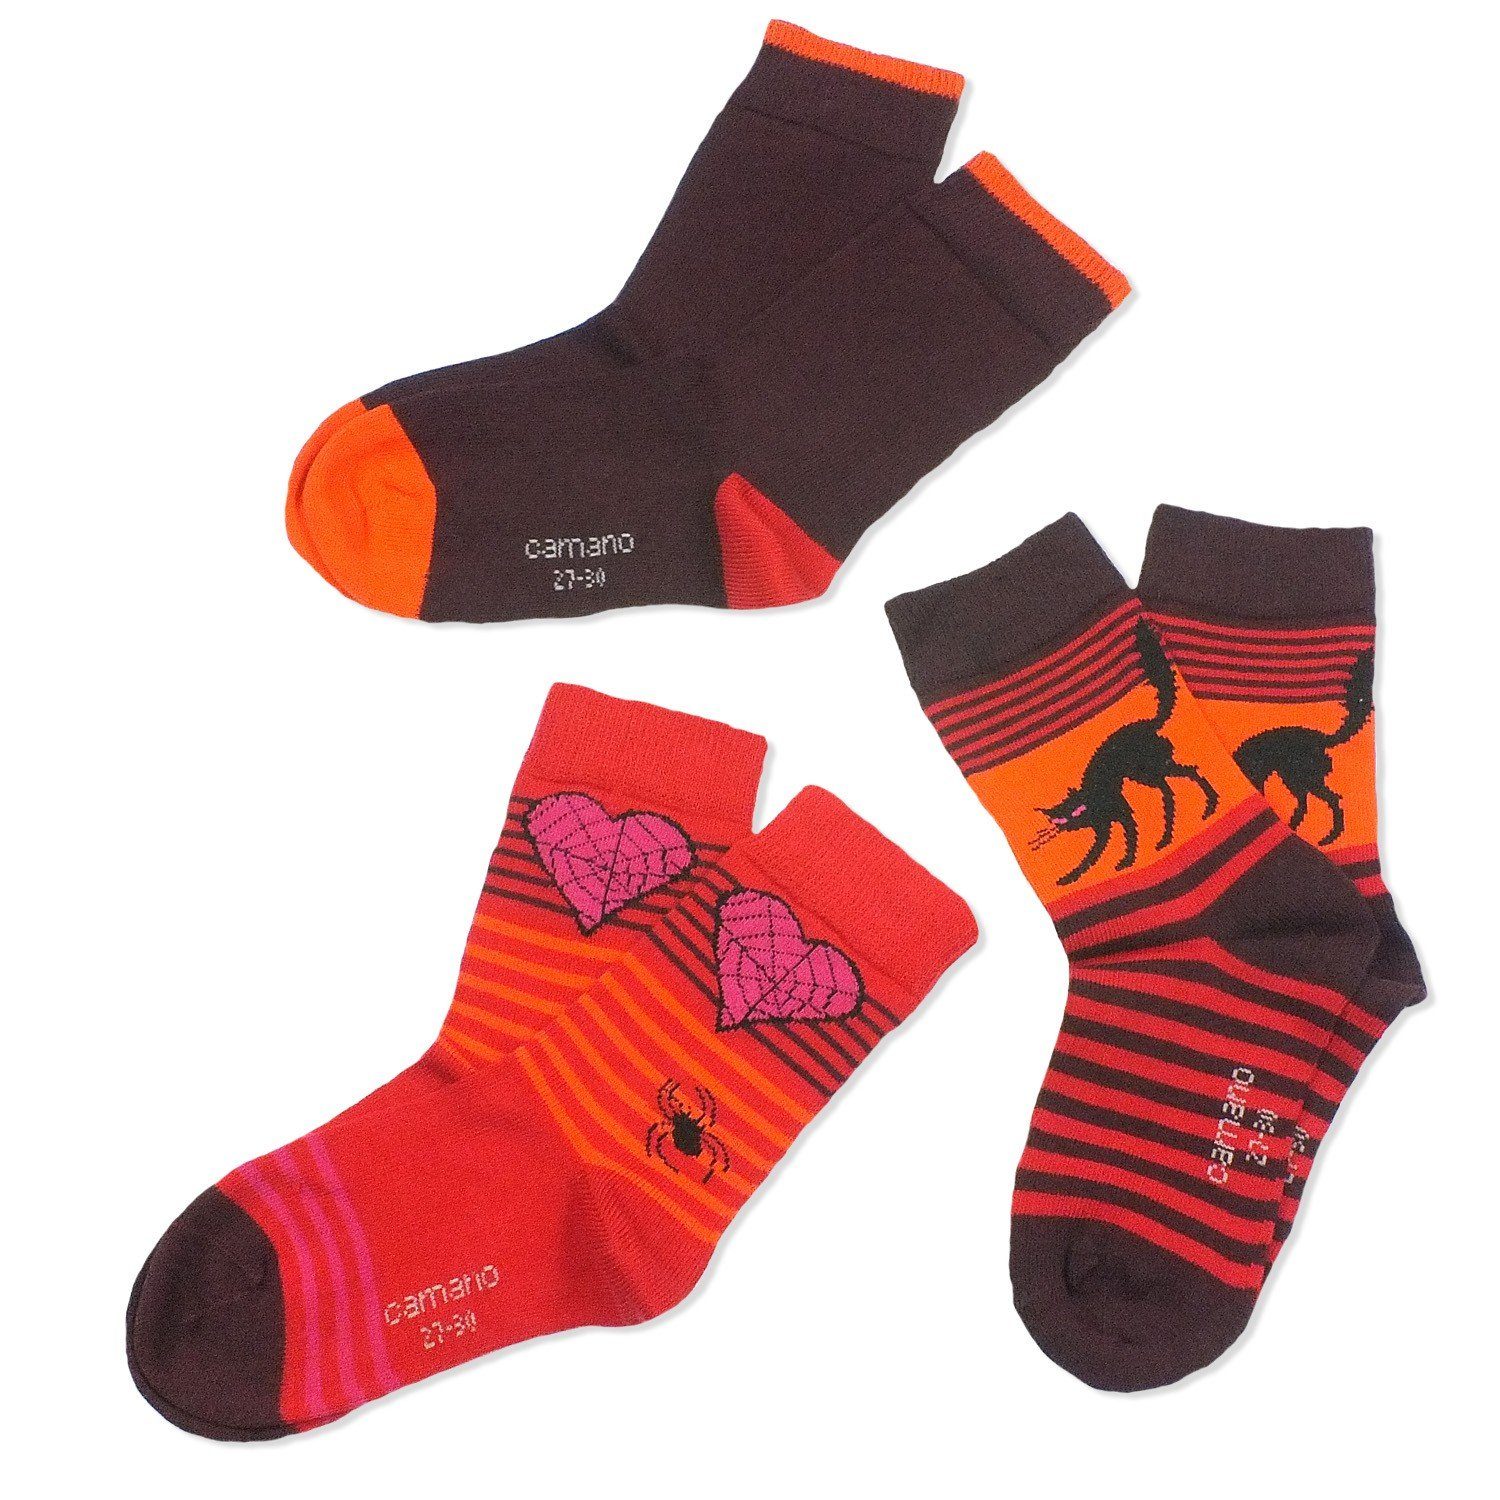 Camano Langsocken CA3829 (Packung, 3-Paar, 3 Paar) Kinder Socken, Jungen & Mädchen mit Baumwolle, Kindersocken | Socken